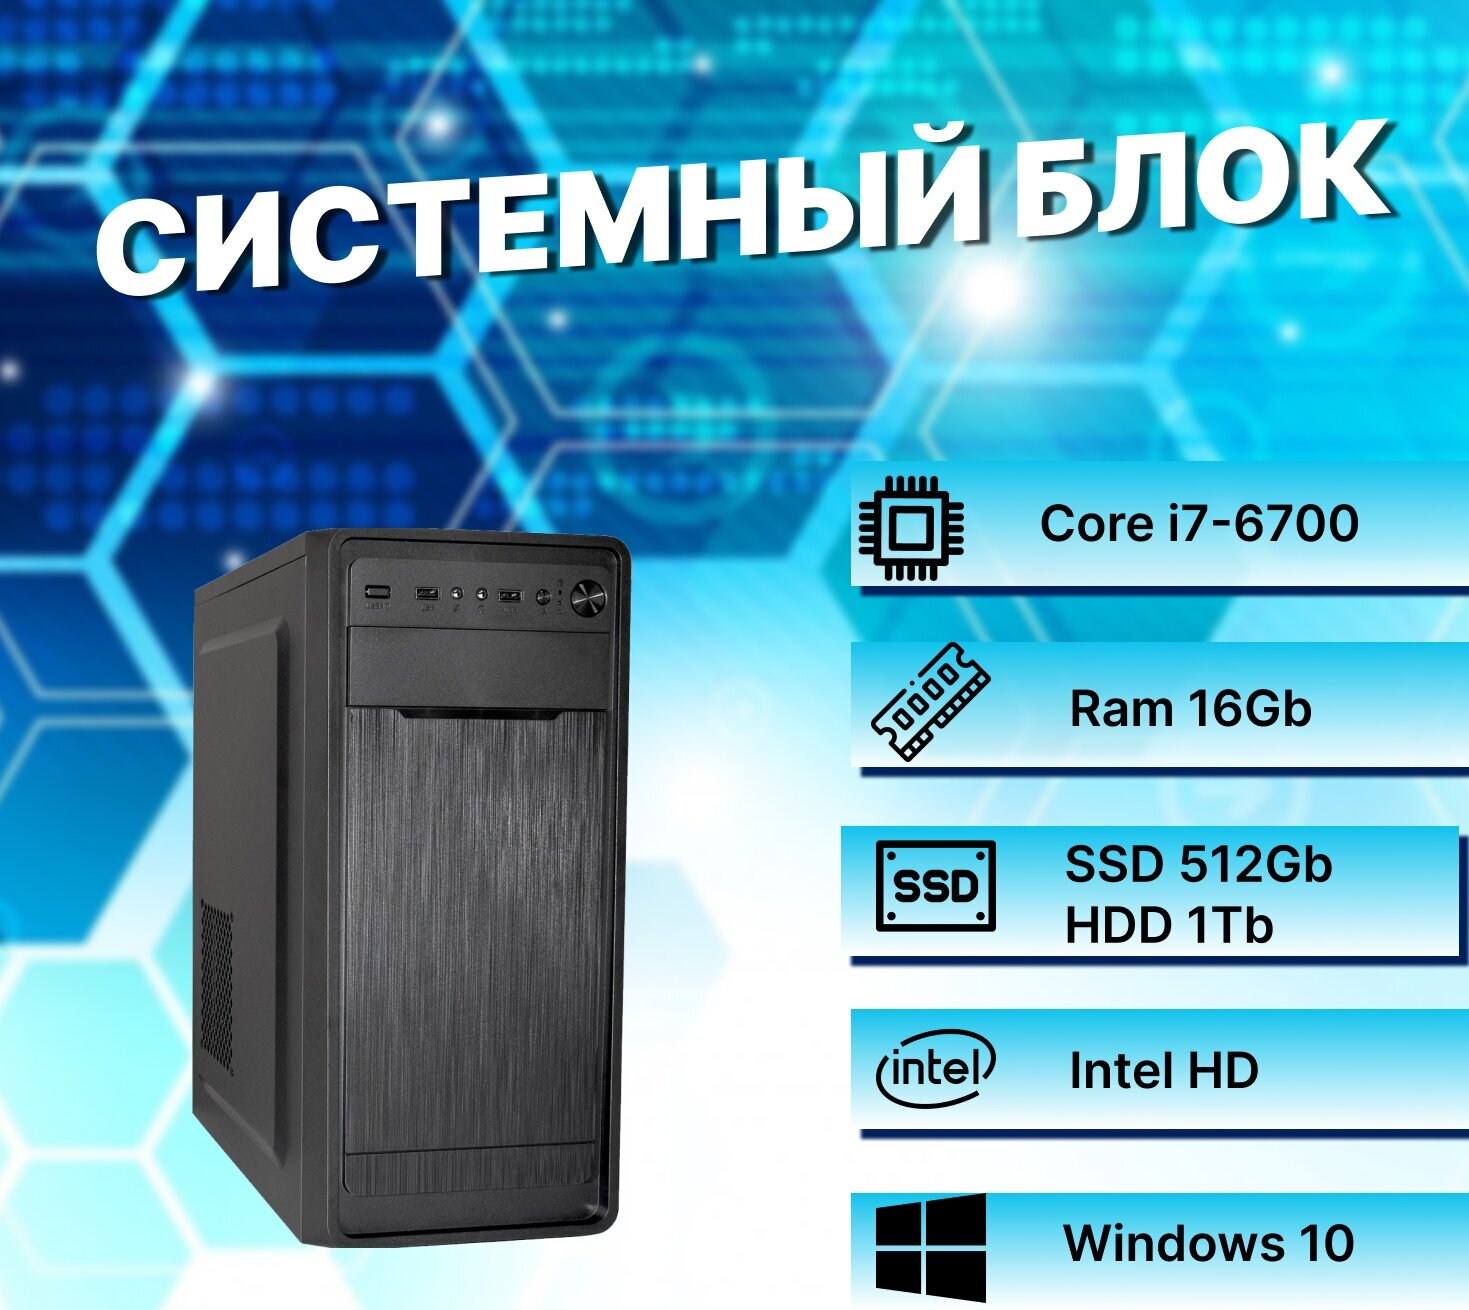 Системный блок Intel Core I7-6700 (3.4ГГц)/ RAM 16Gb/ SSD 512Gb/ HDD 1Tb/ Intel HD/ Windows 10 Pro